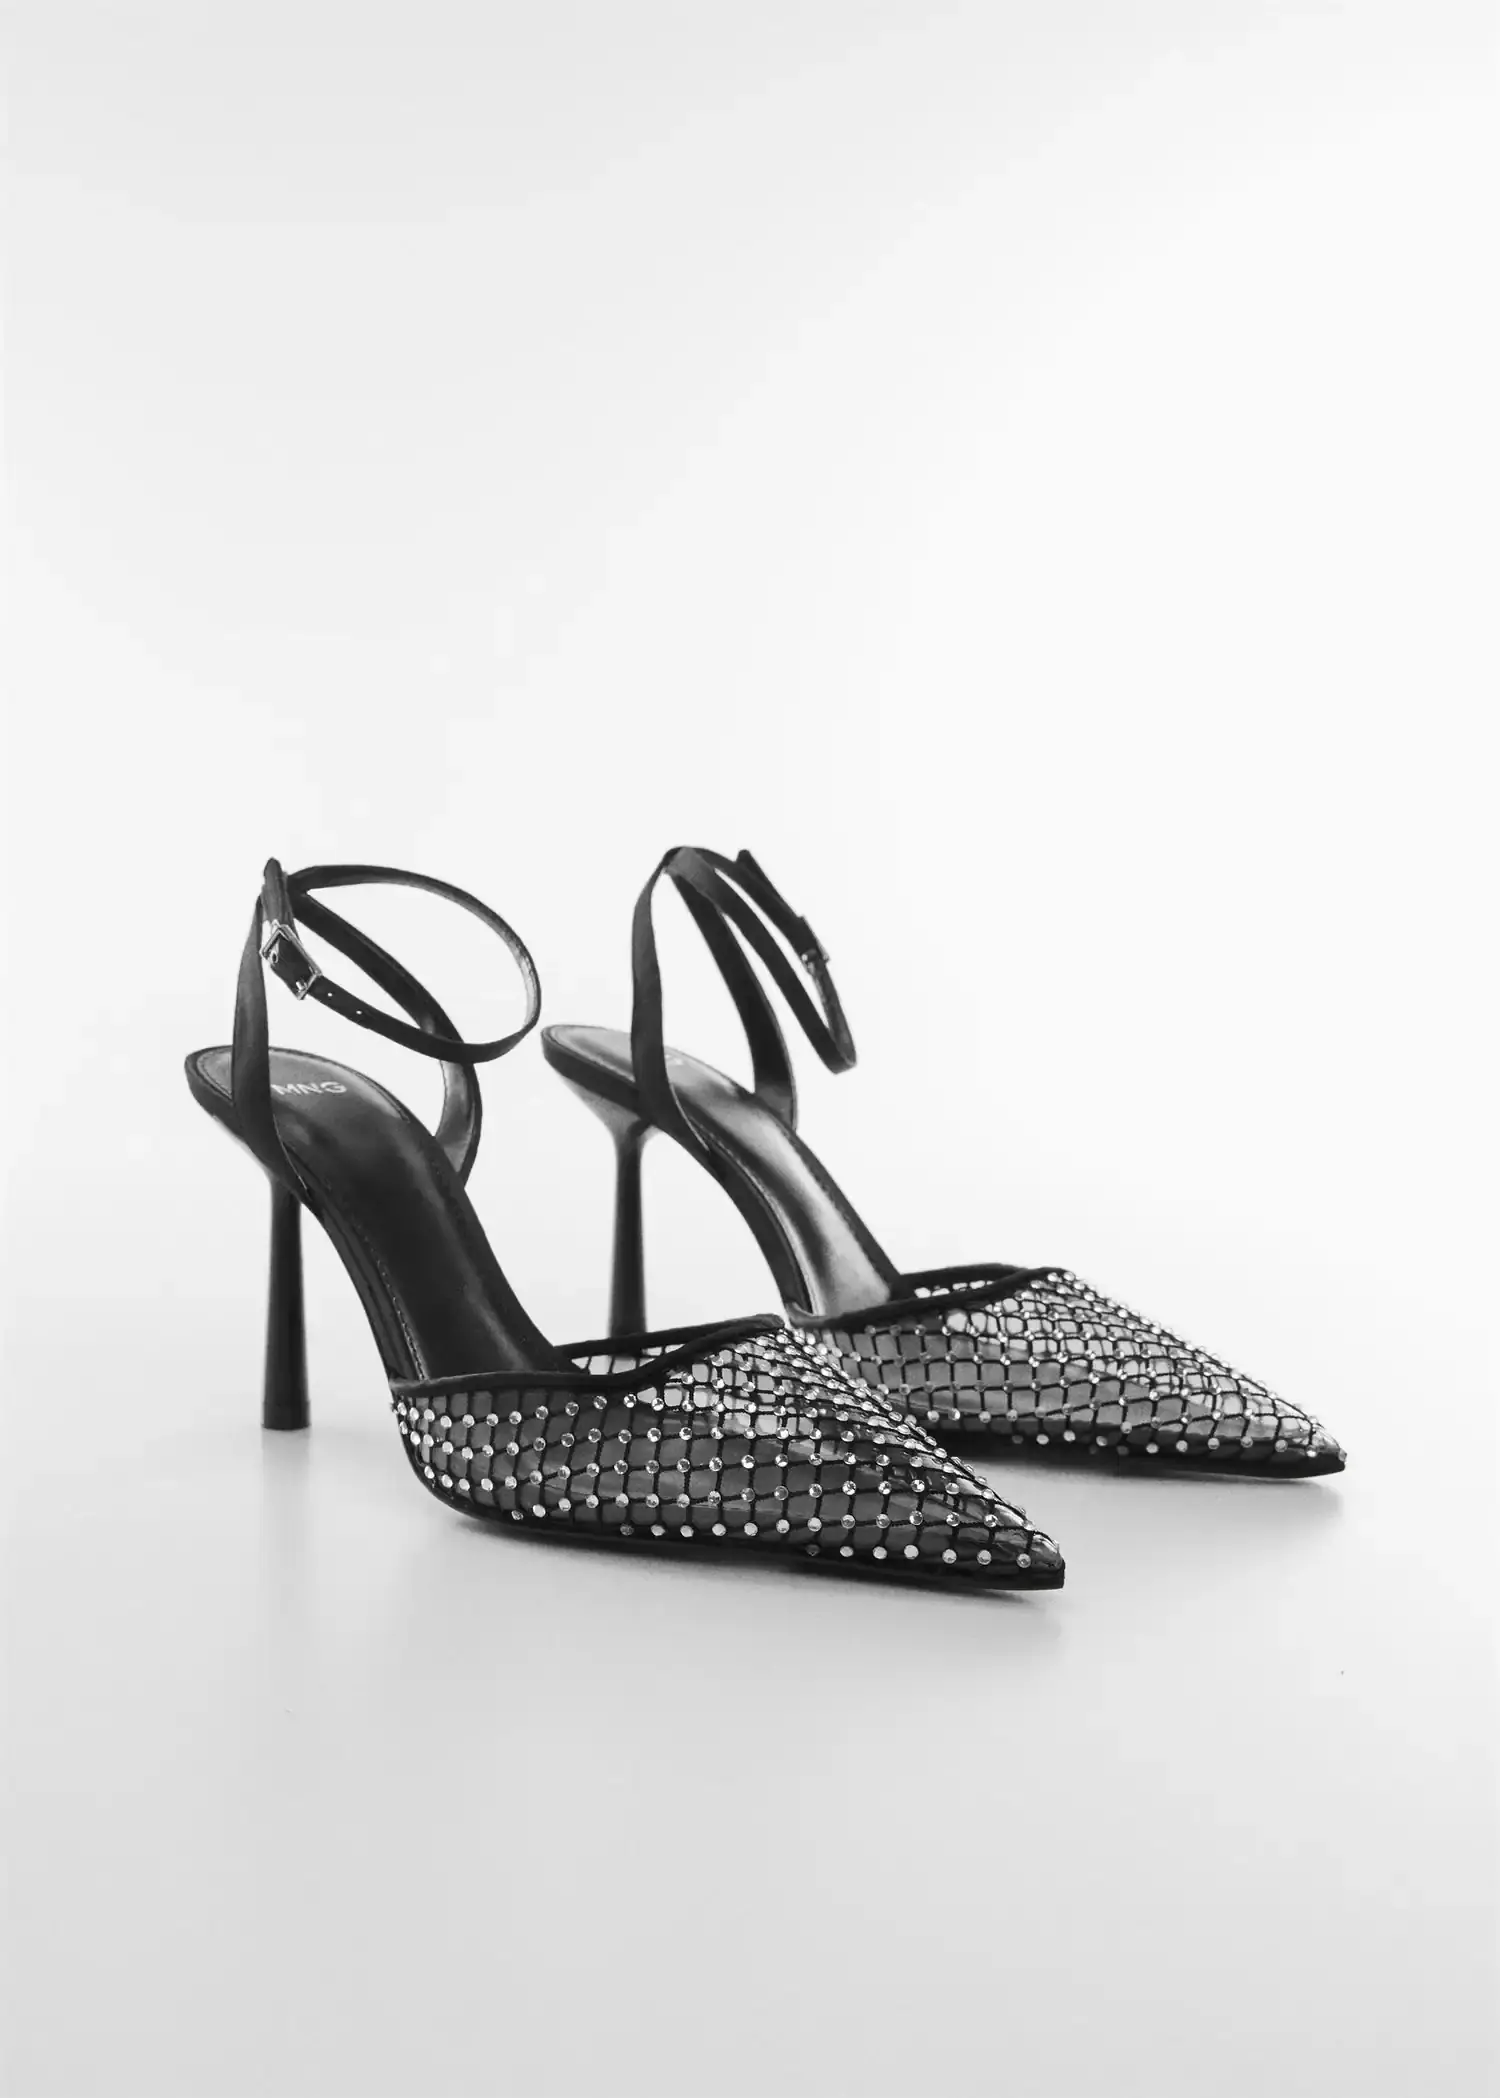 Mango Rhinestone mesh shoe. a pair of black high heel shoes on a white surface. 